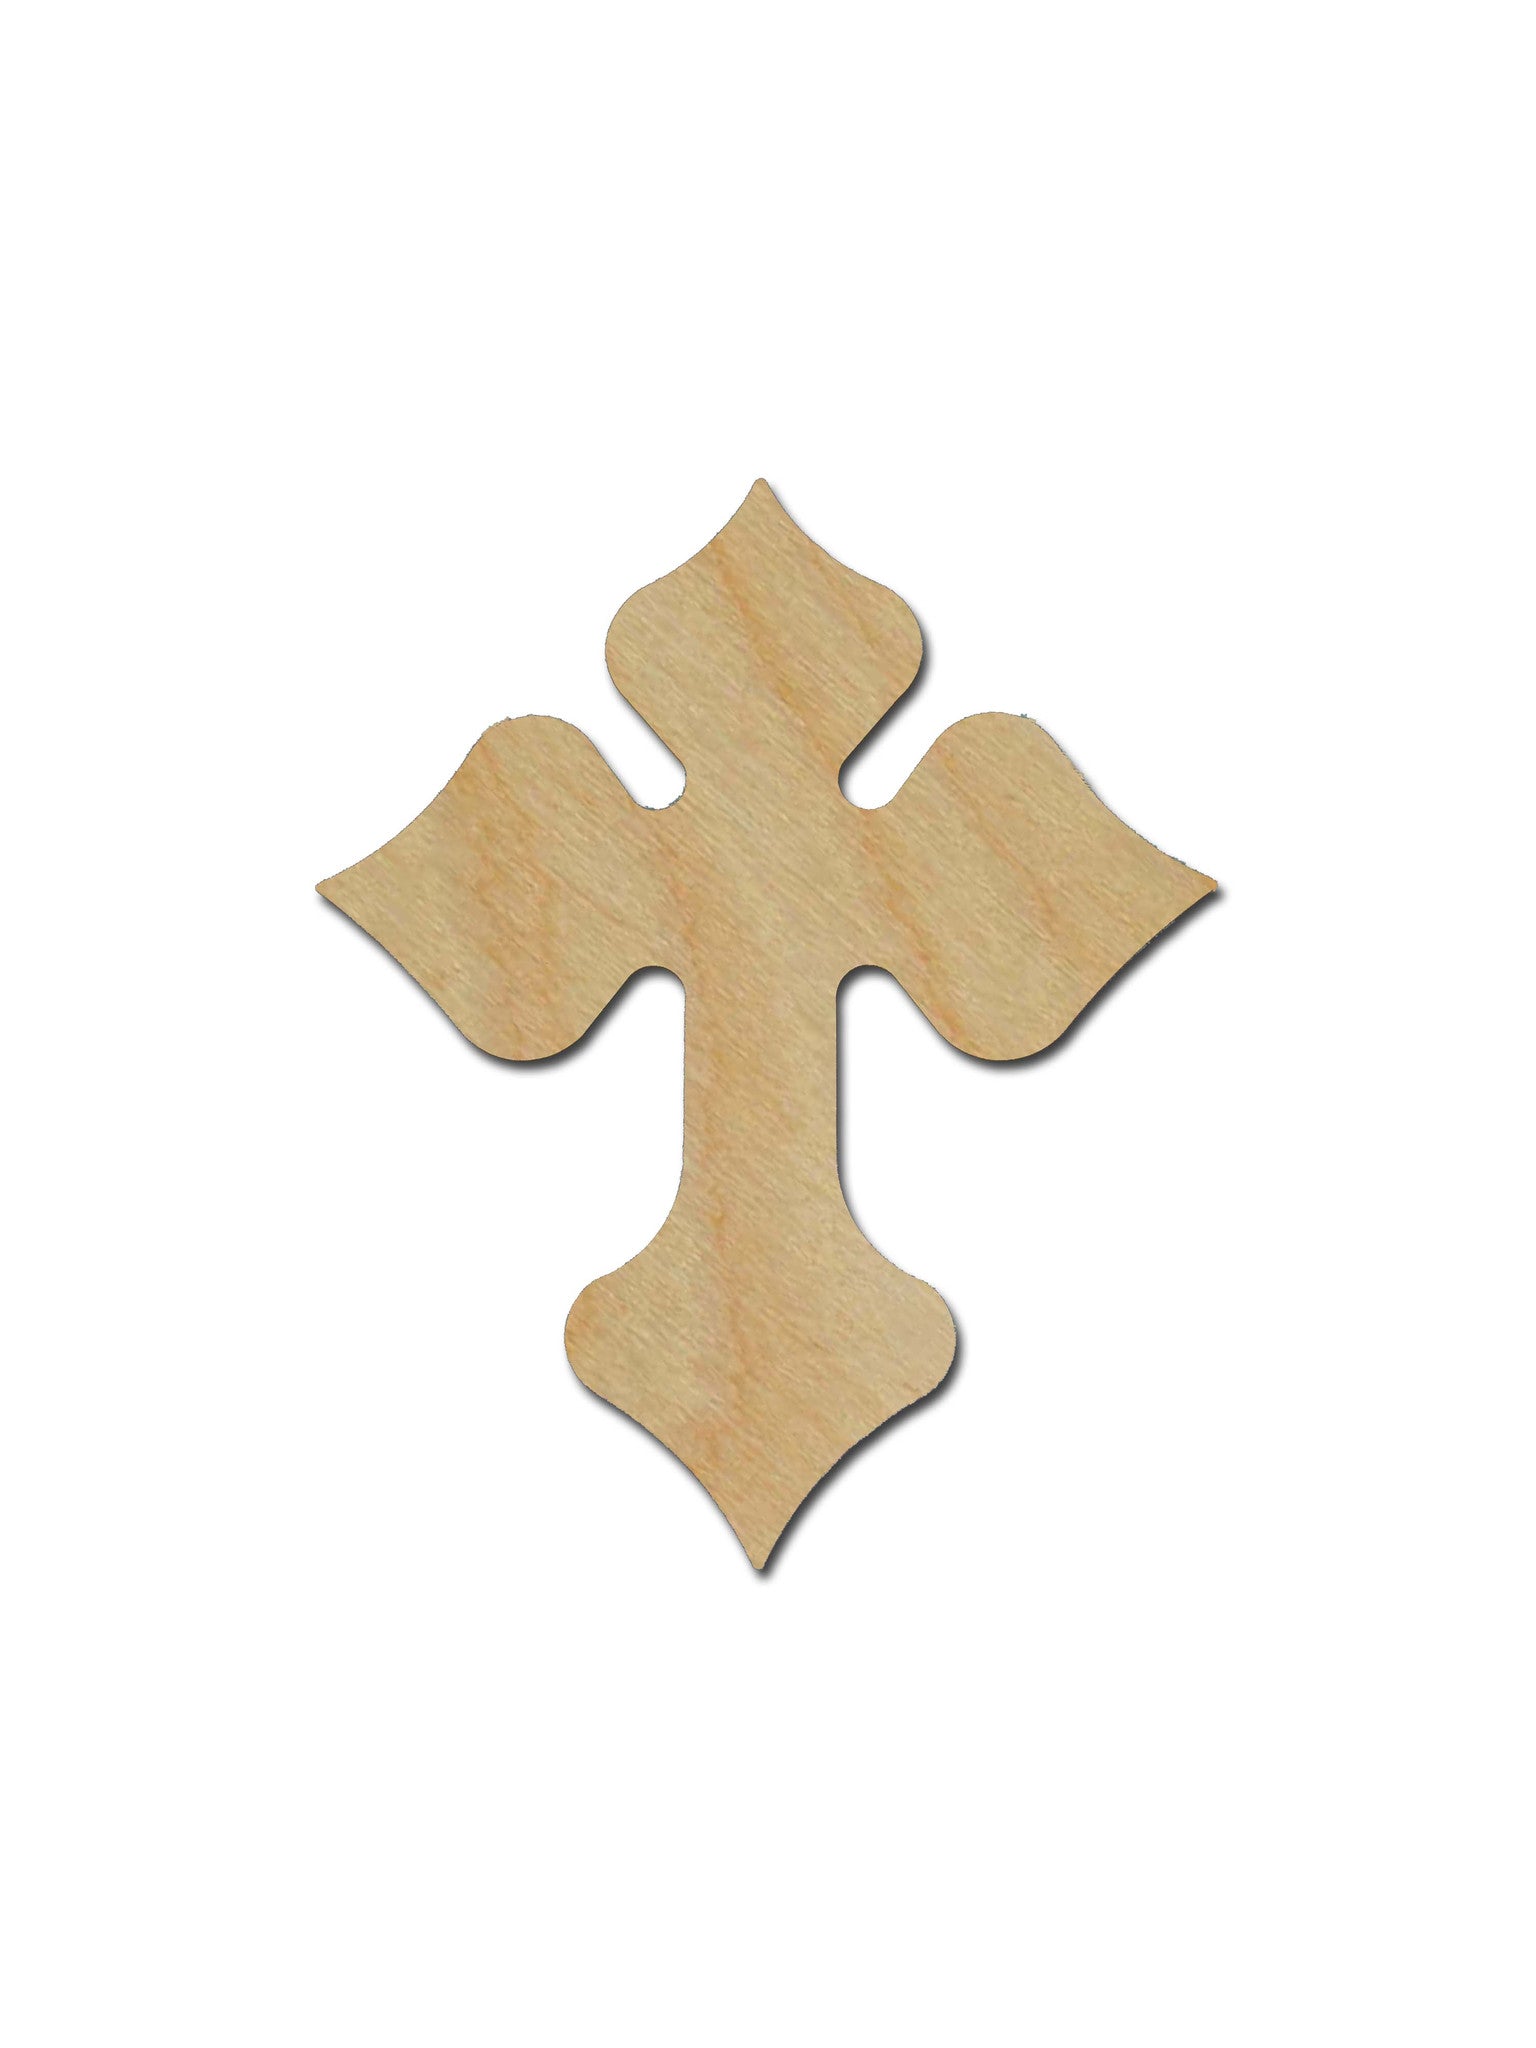 Unfinished Wood Crosses